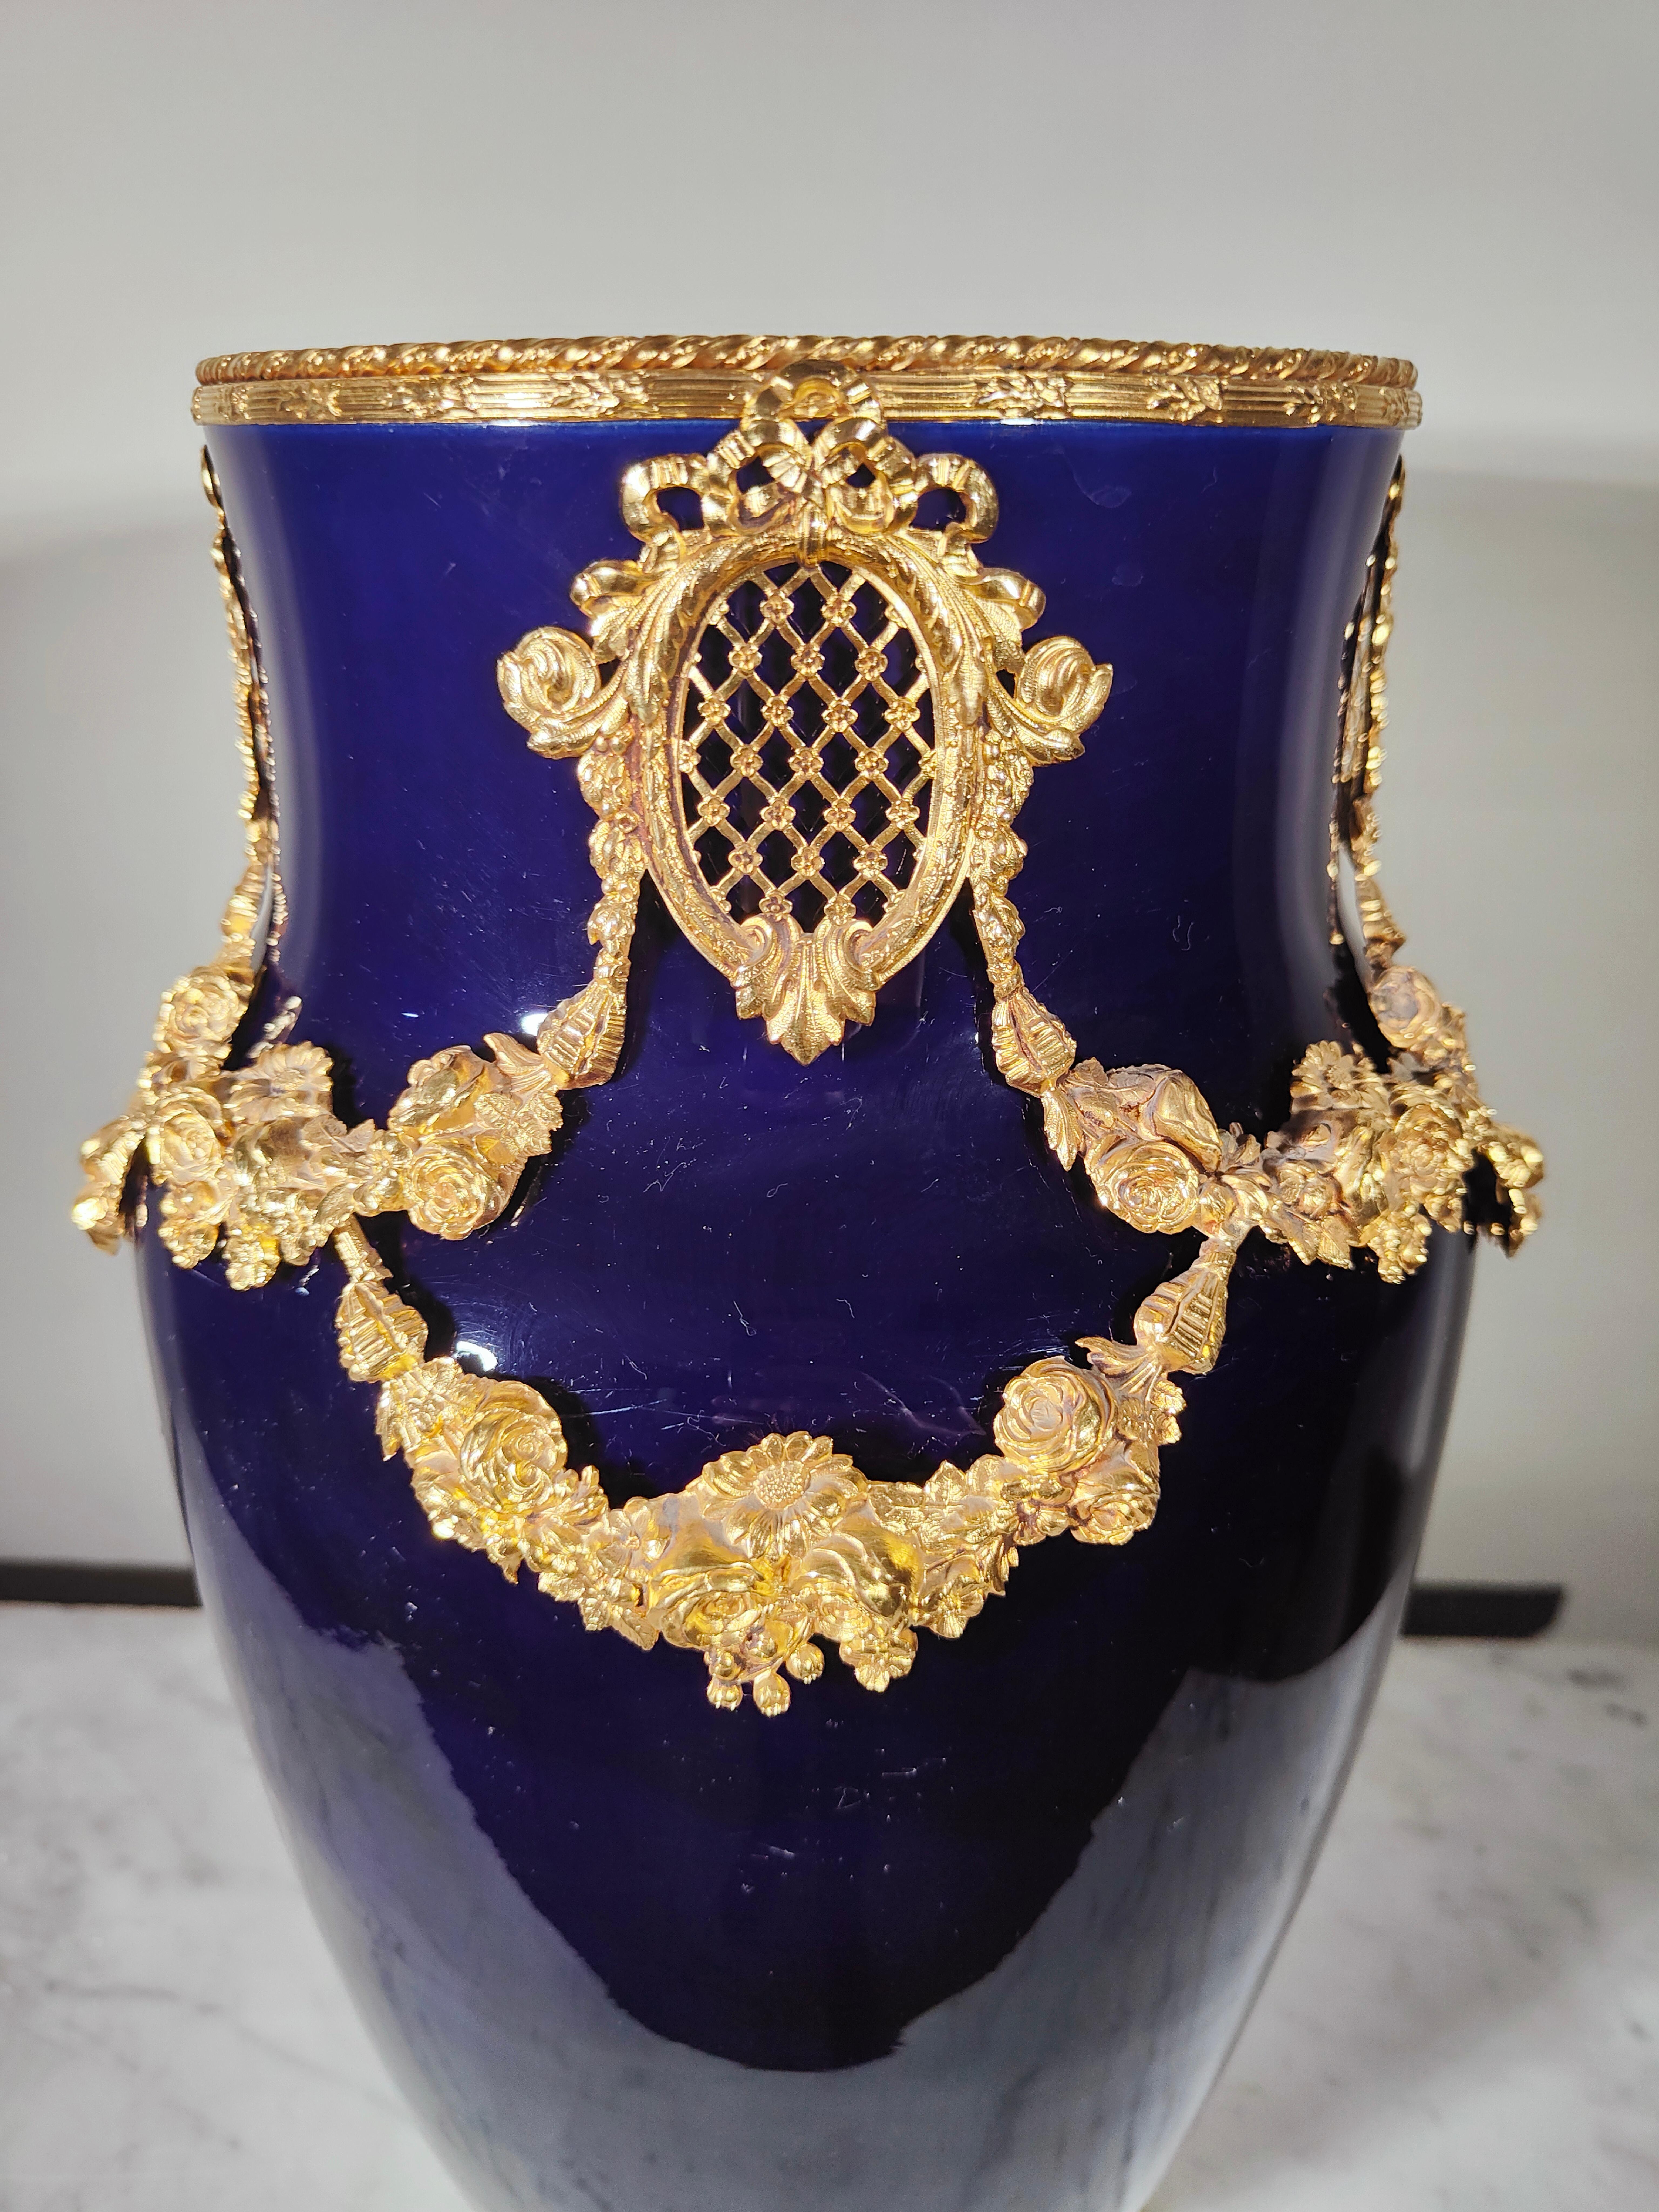 19th century Porcelain Vase
ELEGANT 19TH CENTURY BLUE PORCELAIN AND GILT BRASS VASE IN GOOD CONDITION MEASURES: 44 CM HIGH AND 27 CM IN DIAMETER.